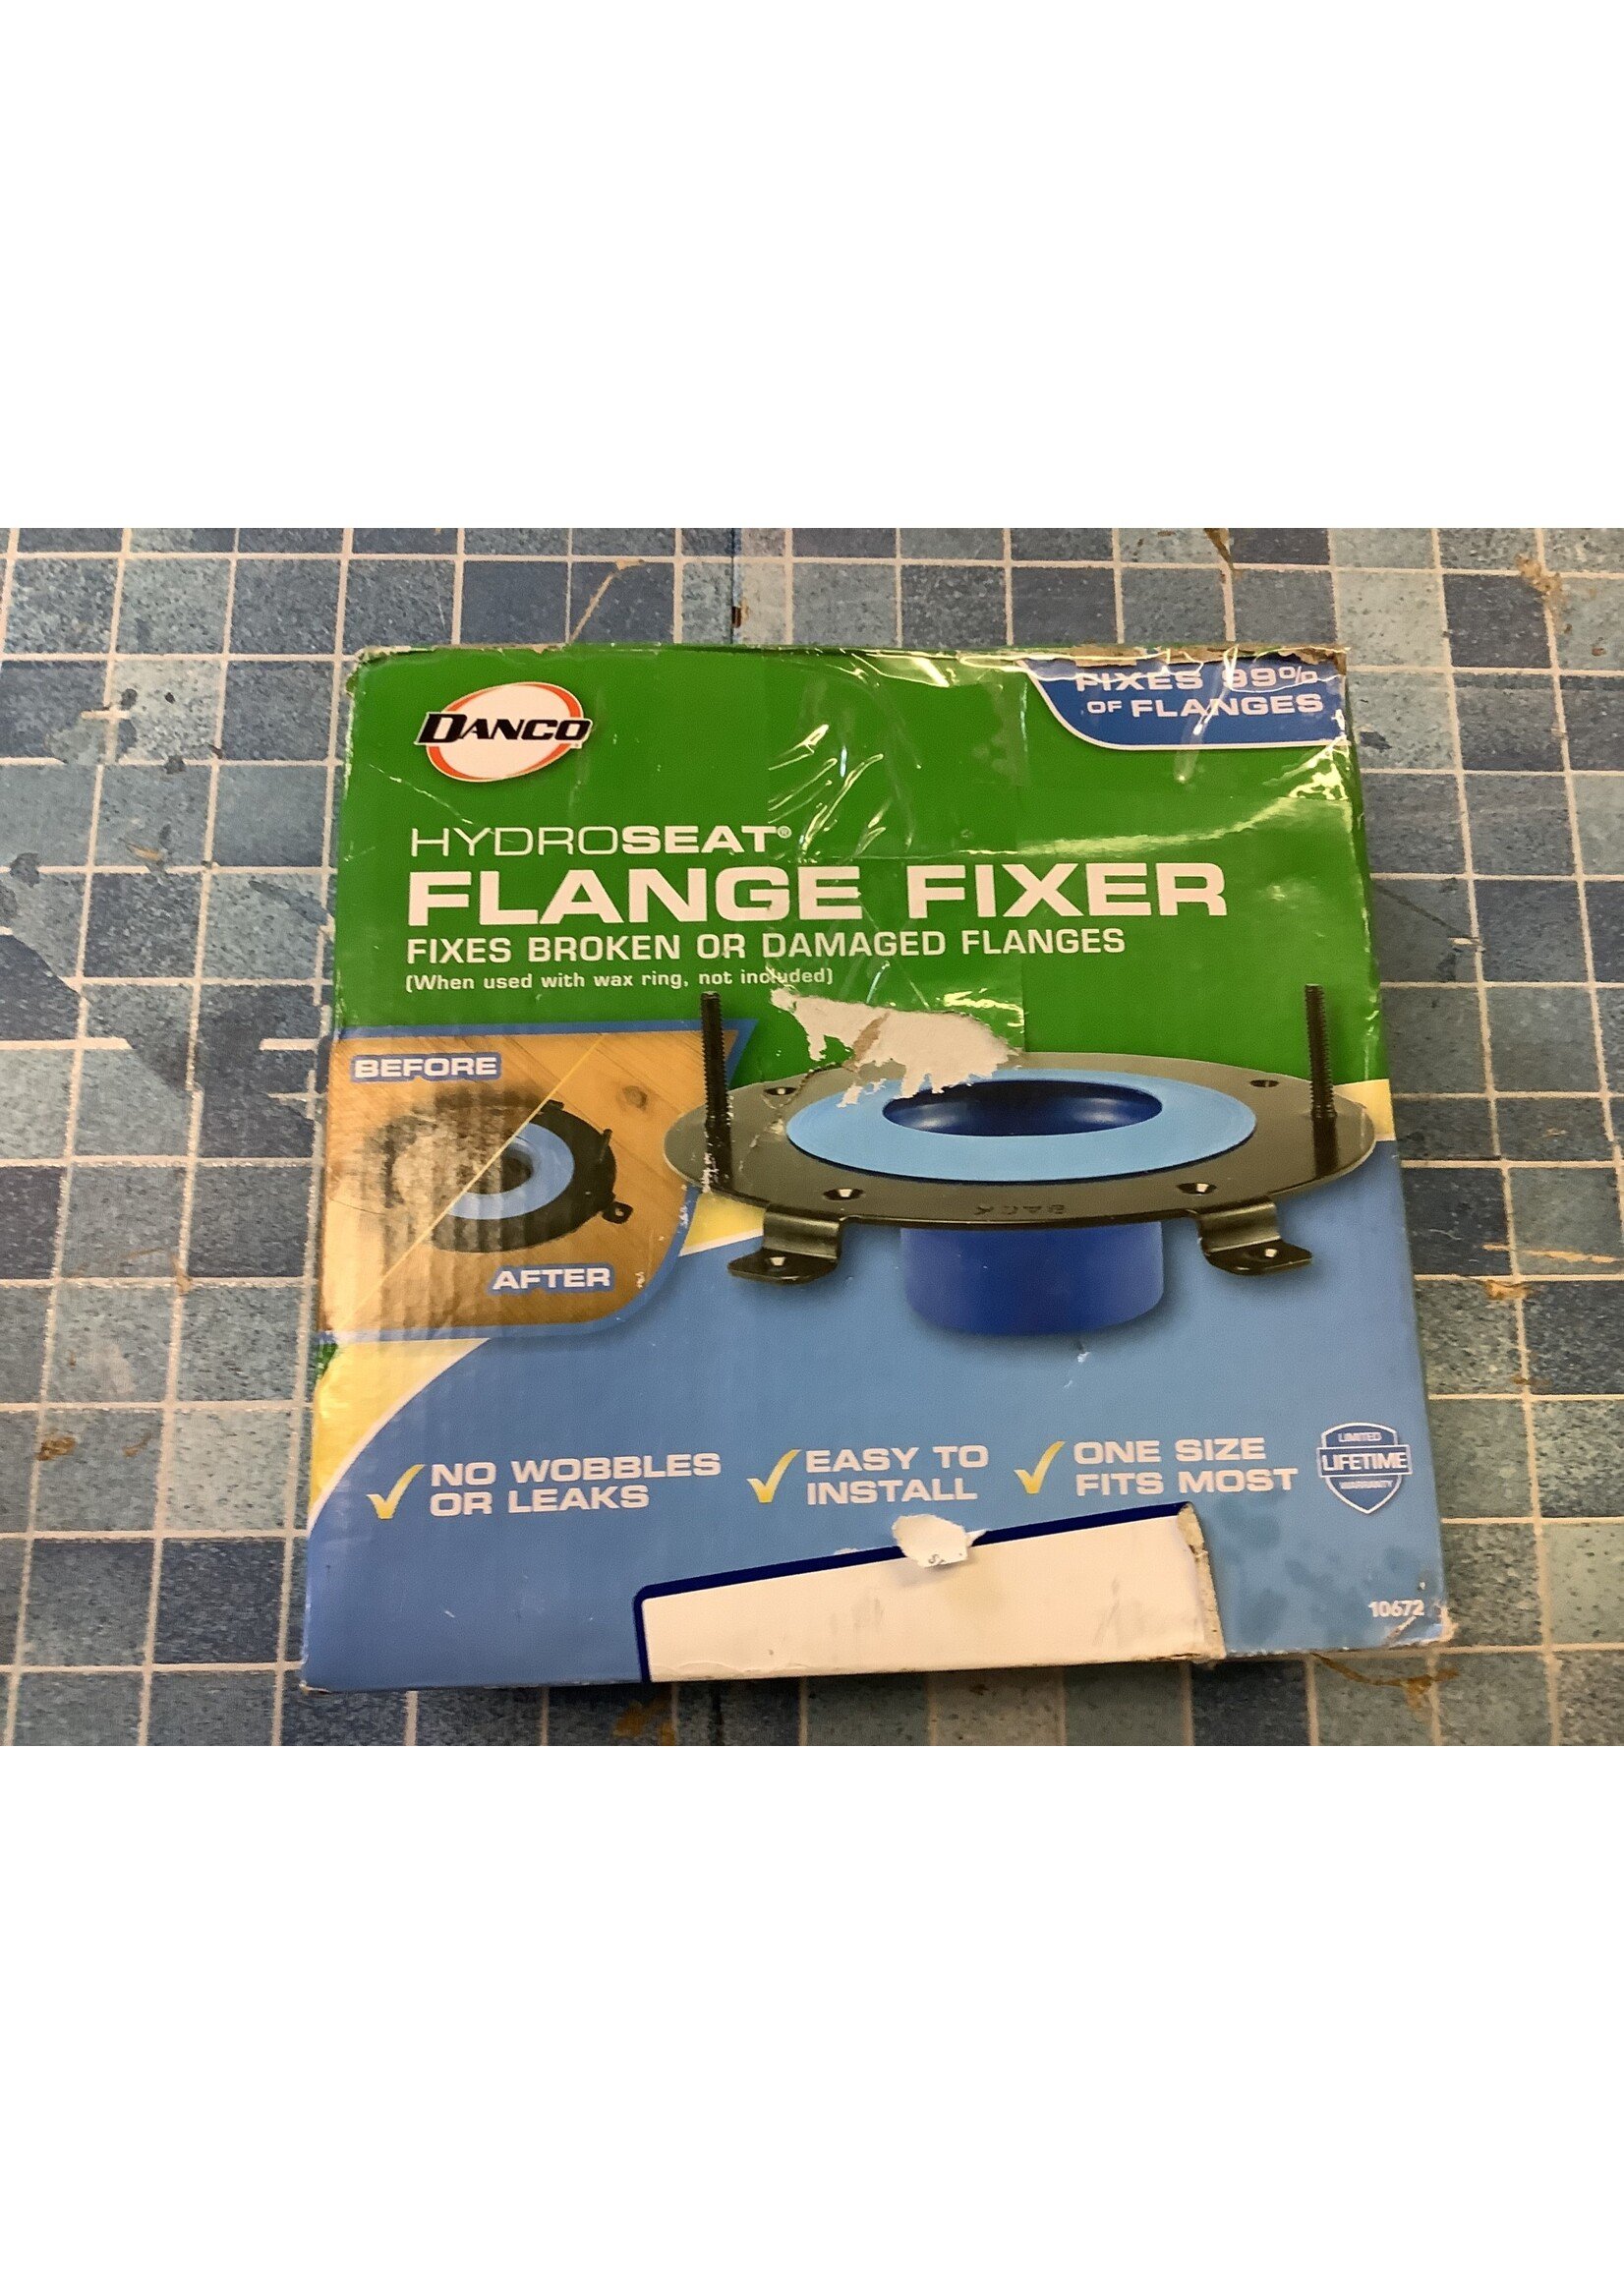 Danco Hydroseat Flange Fixer (open box)